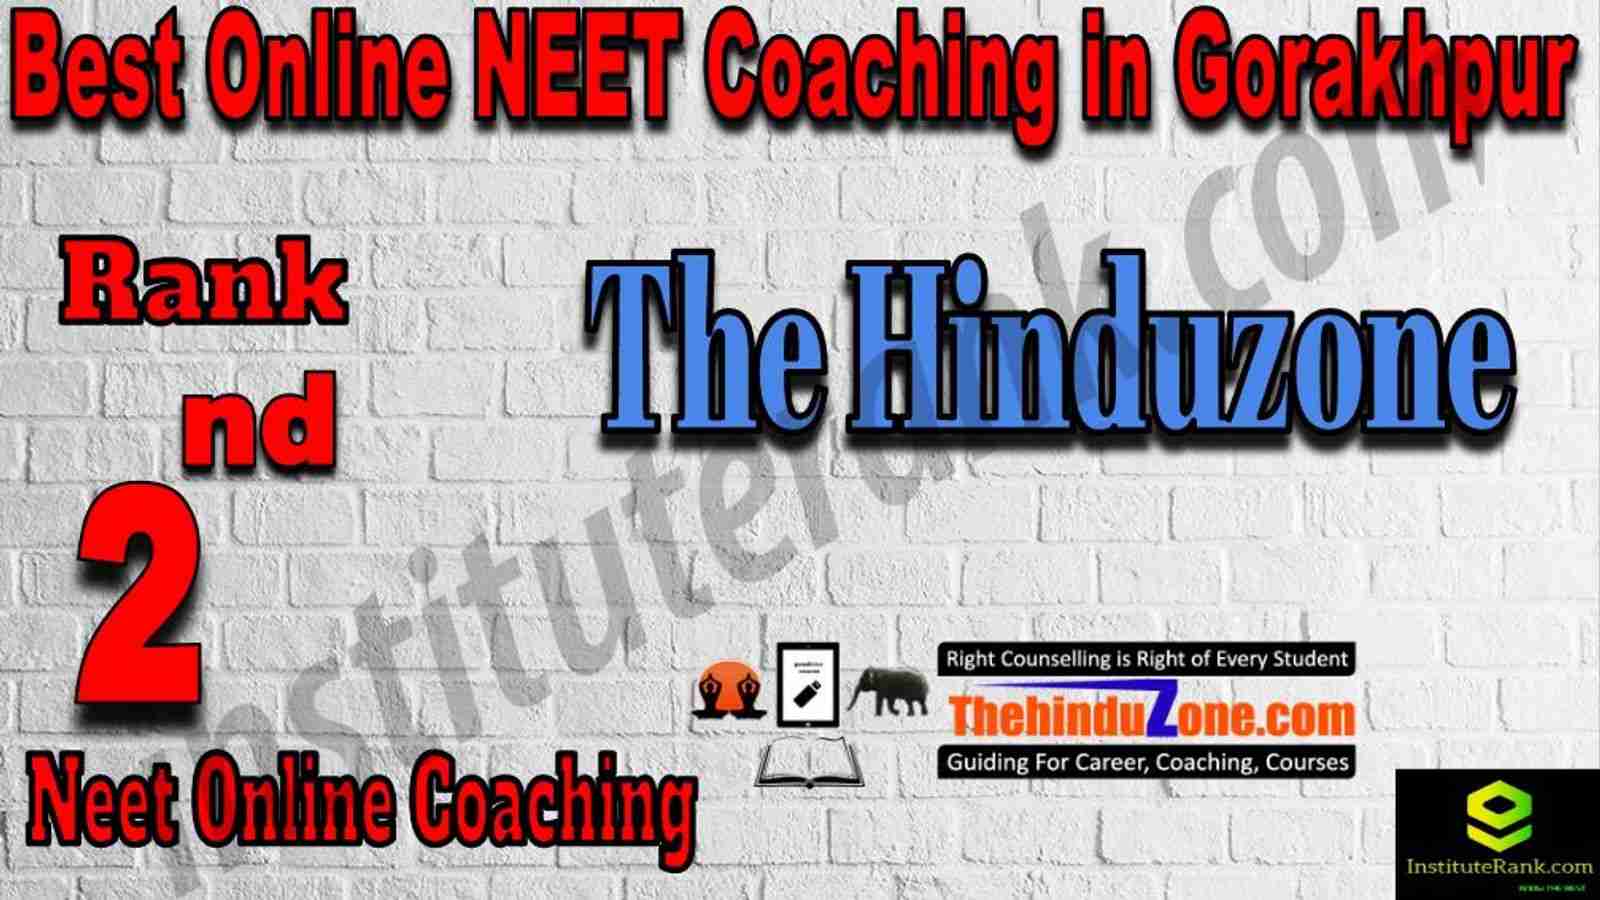 2nd Best Online Neet Coaching in Gorakhpur